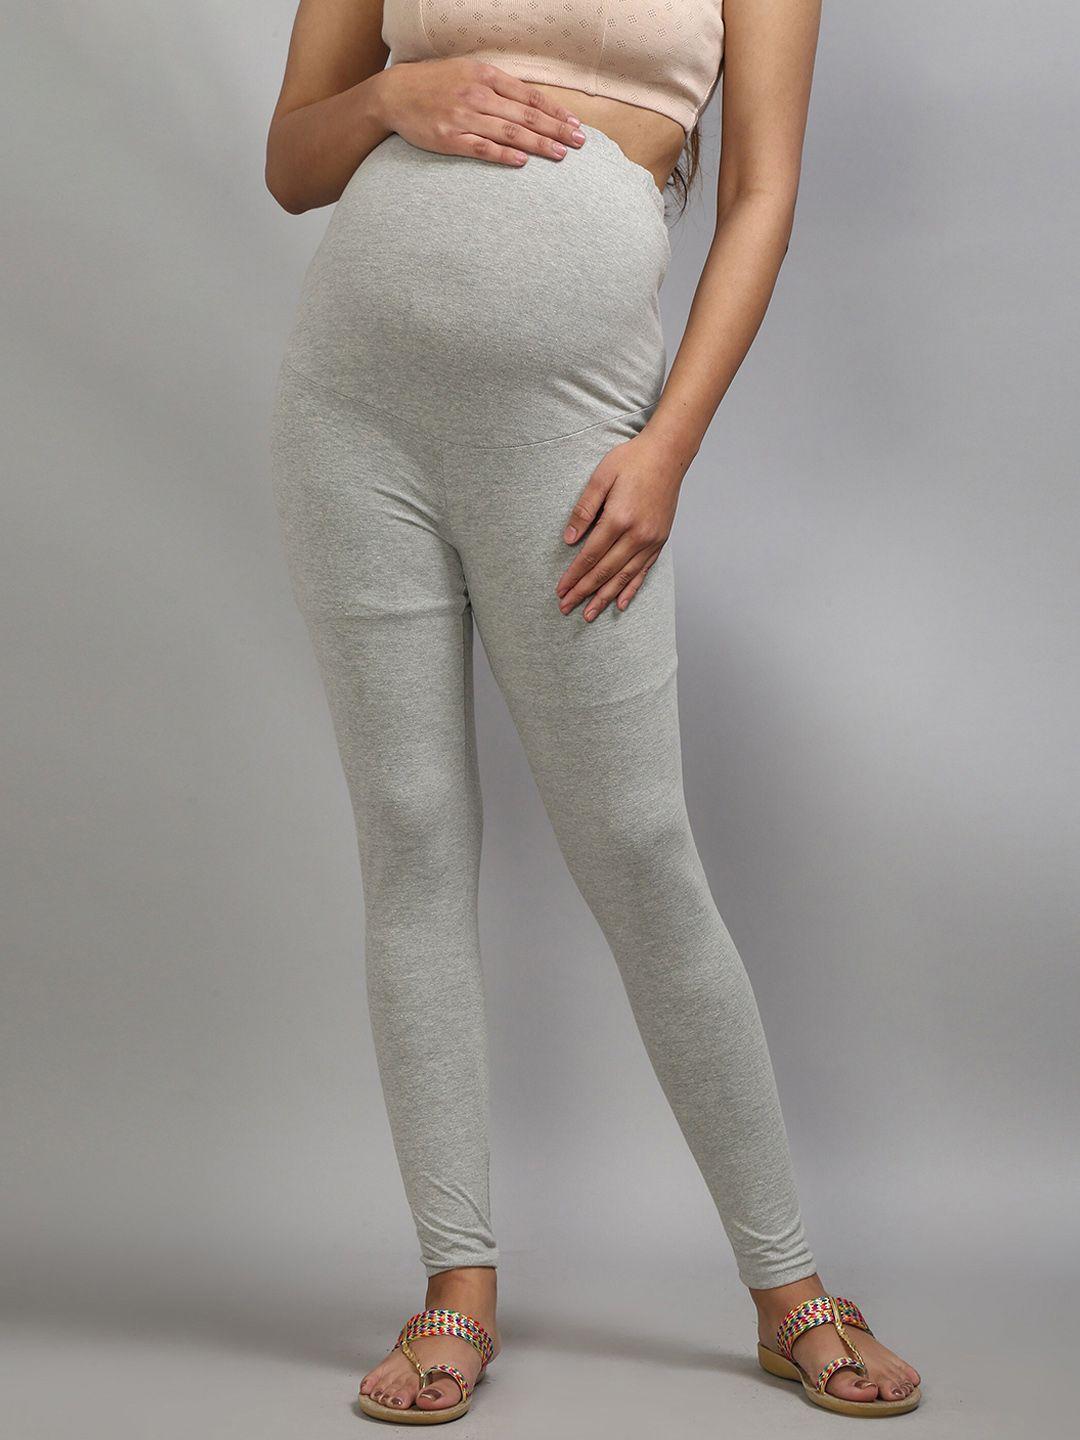 sillyboom women grey solid full length maternity leggings